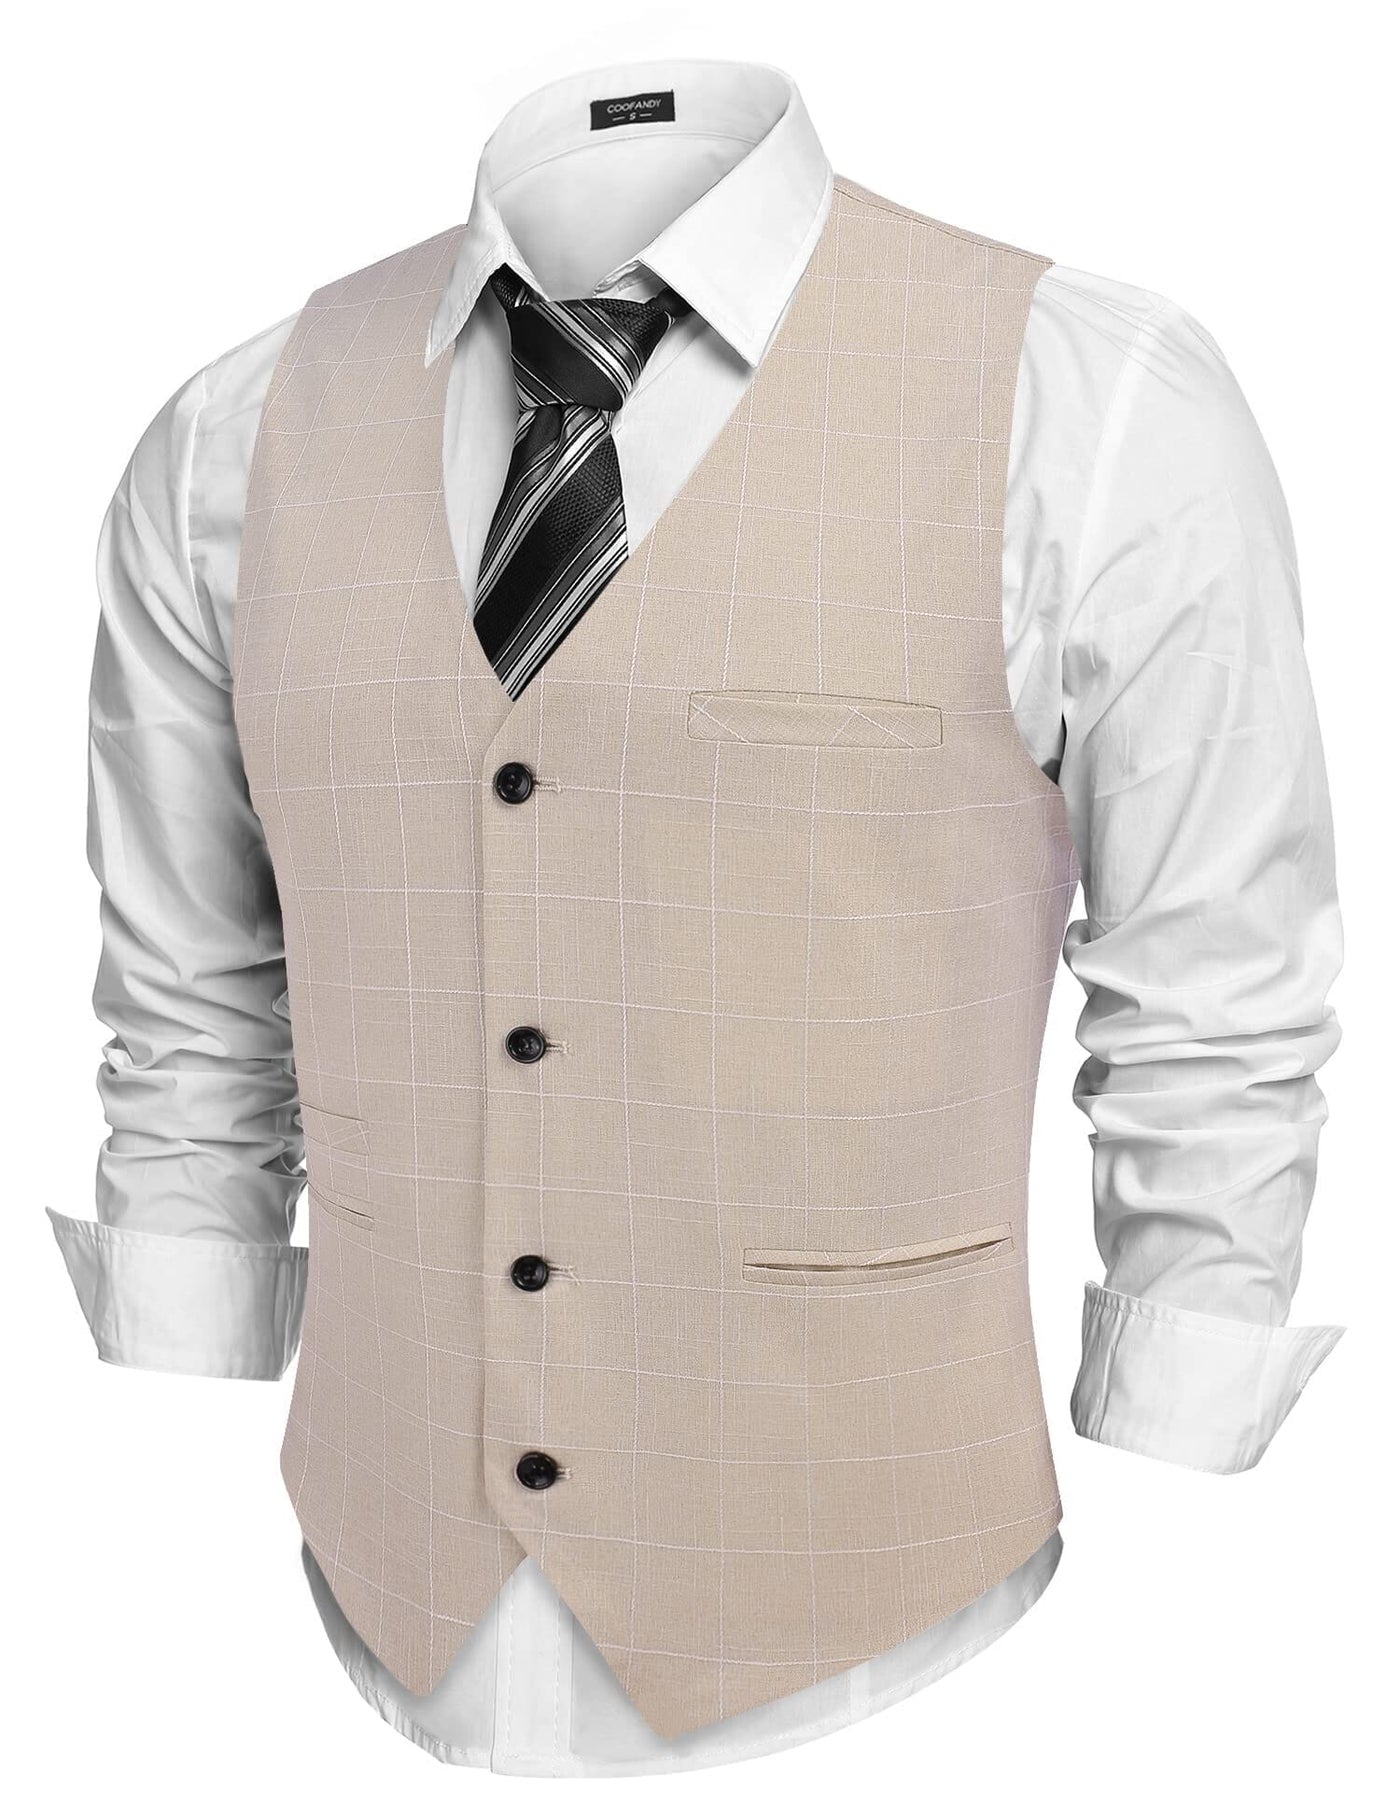 Coofandy Waistcoat Business Vests (US Only) Vest coofandy Light Khaki S 